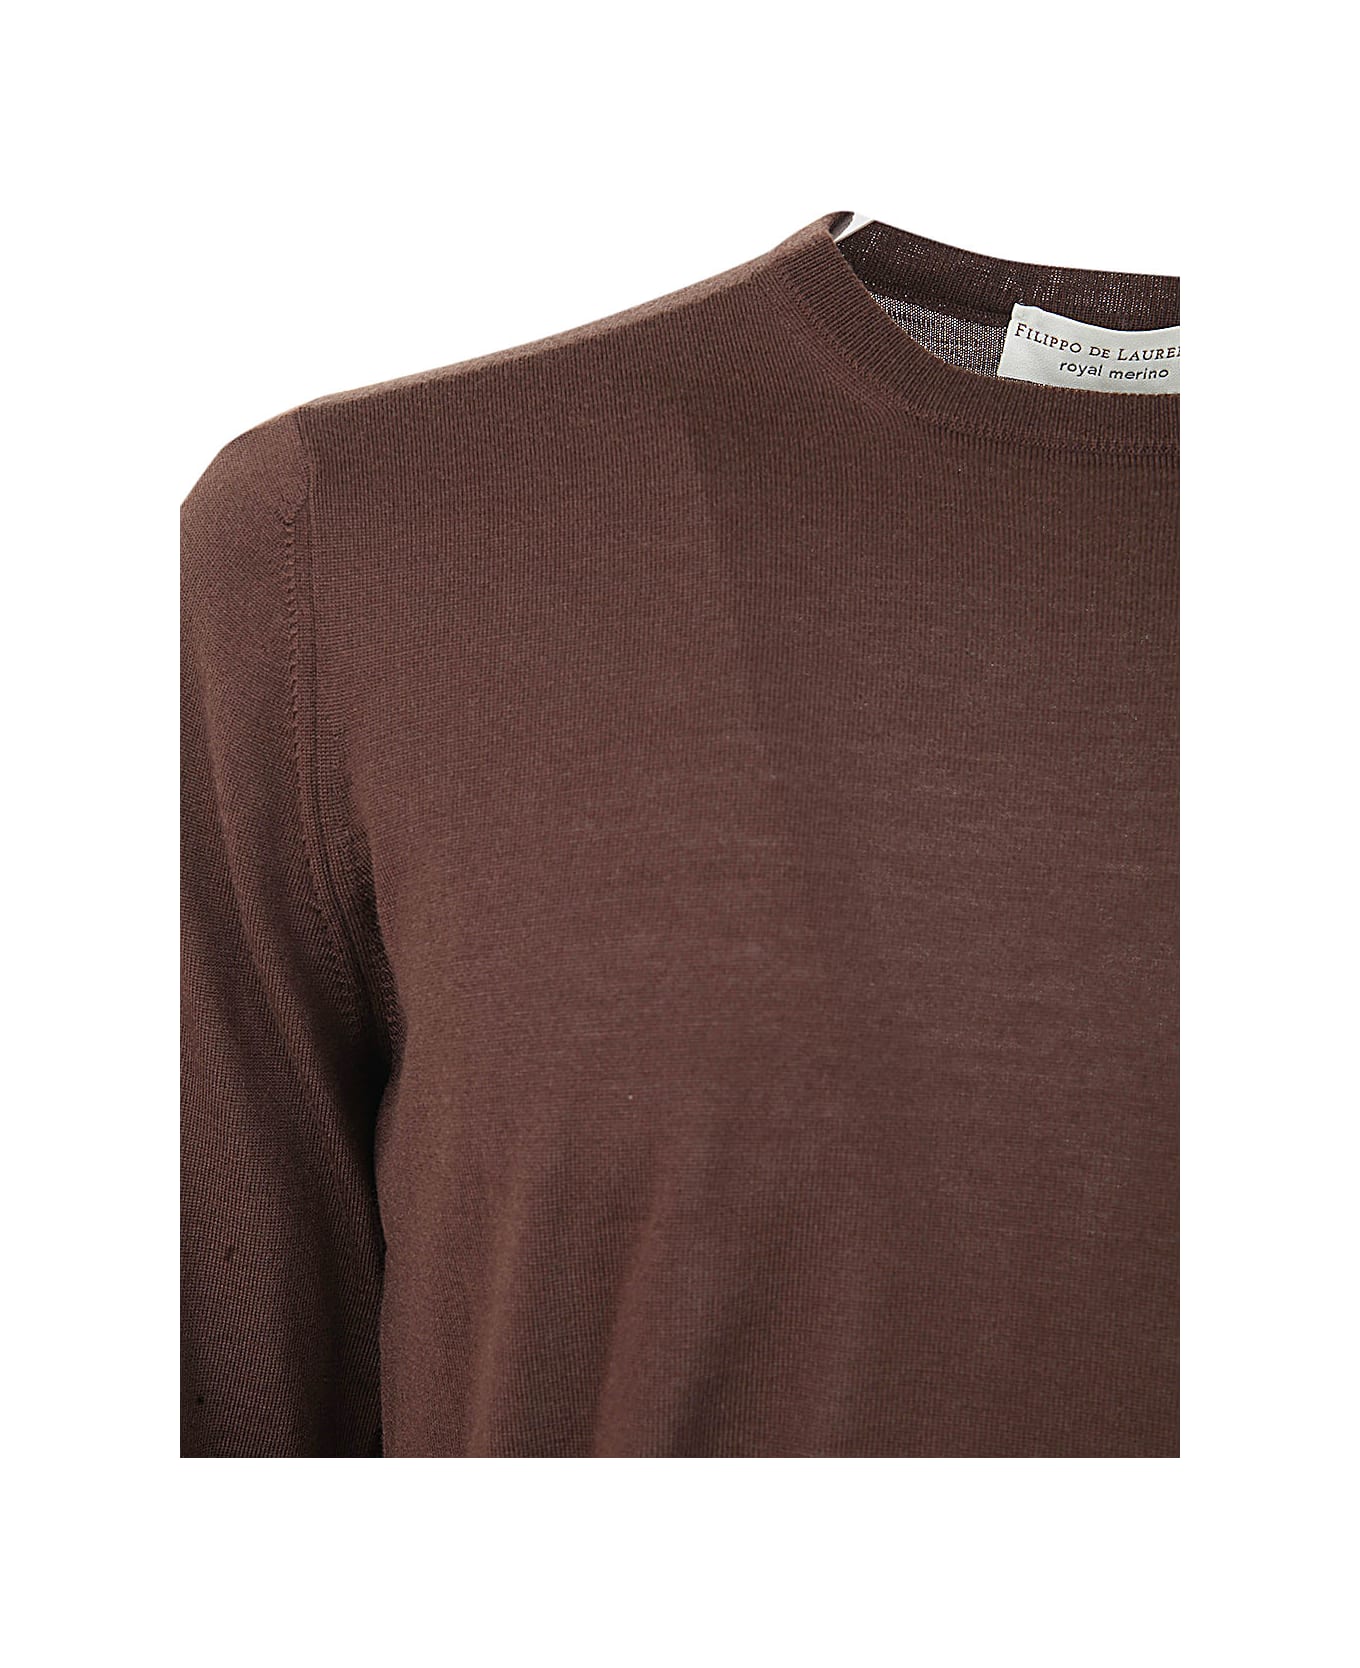 Filippo De Laurentiis Royal Merino Long Sleeves Crew Neck Sweater - Brown